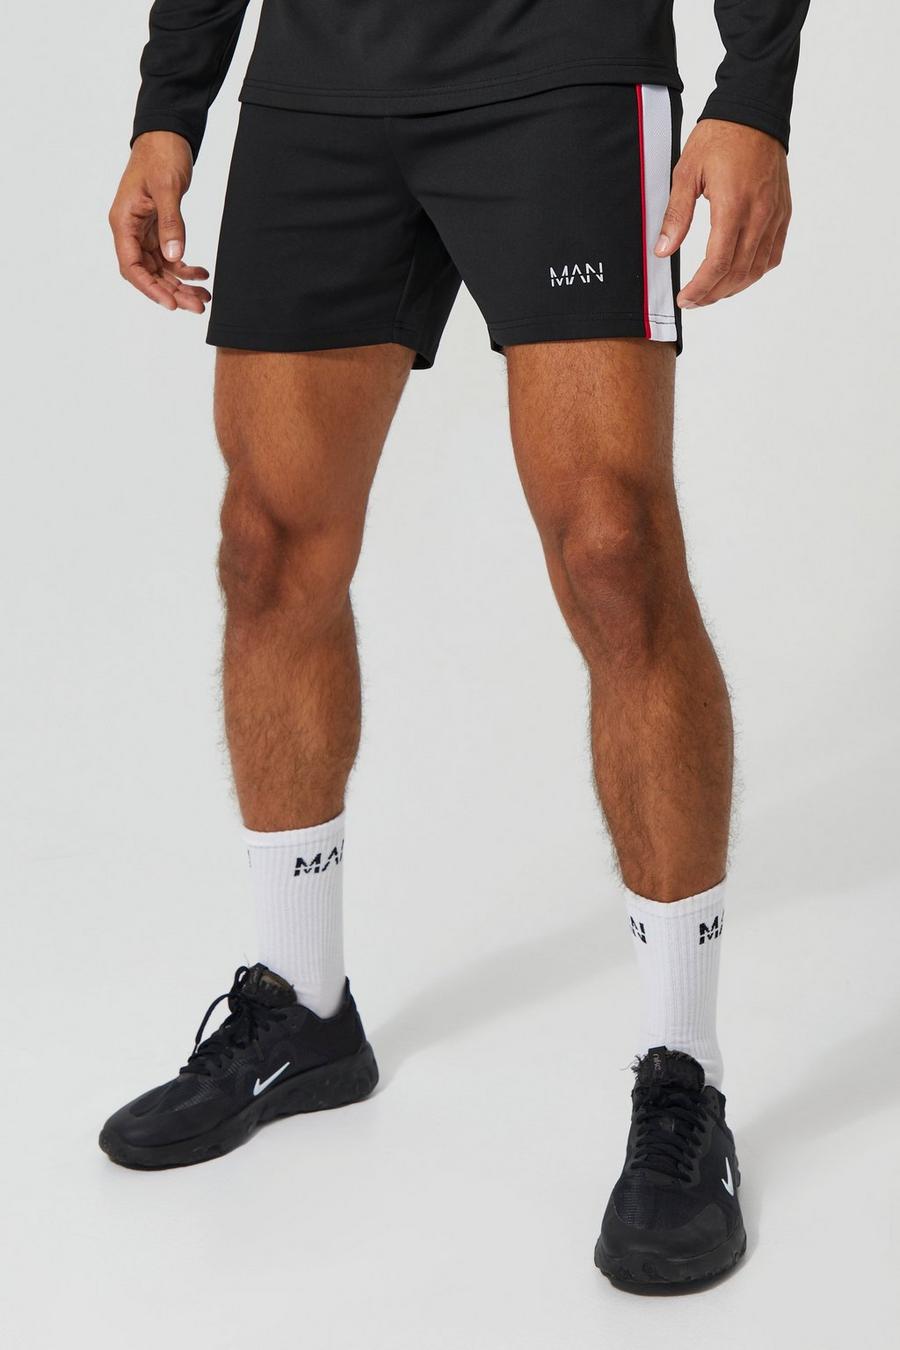 Man Active Performance Fußball-Shorts, Black